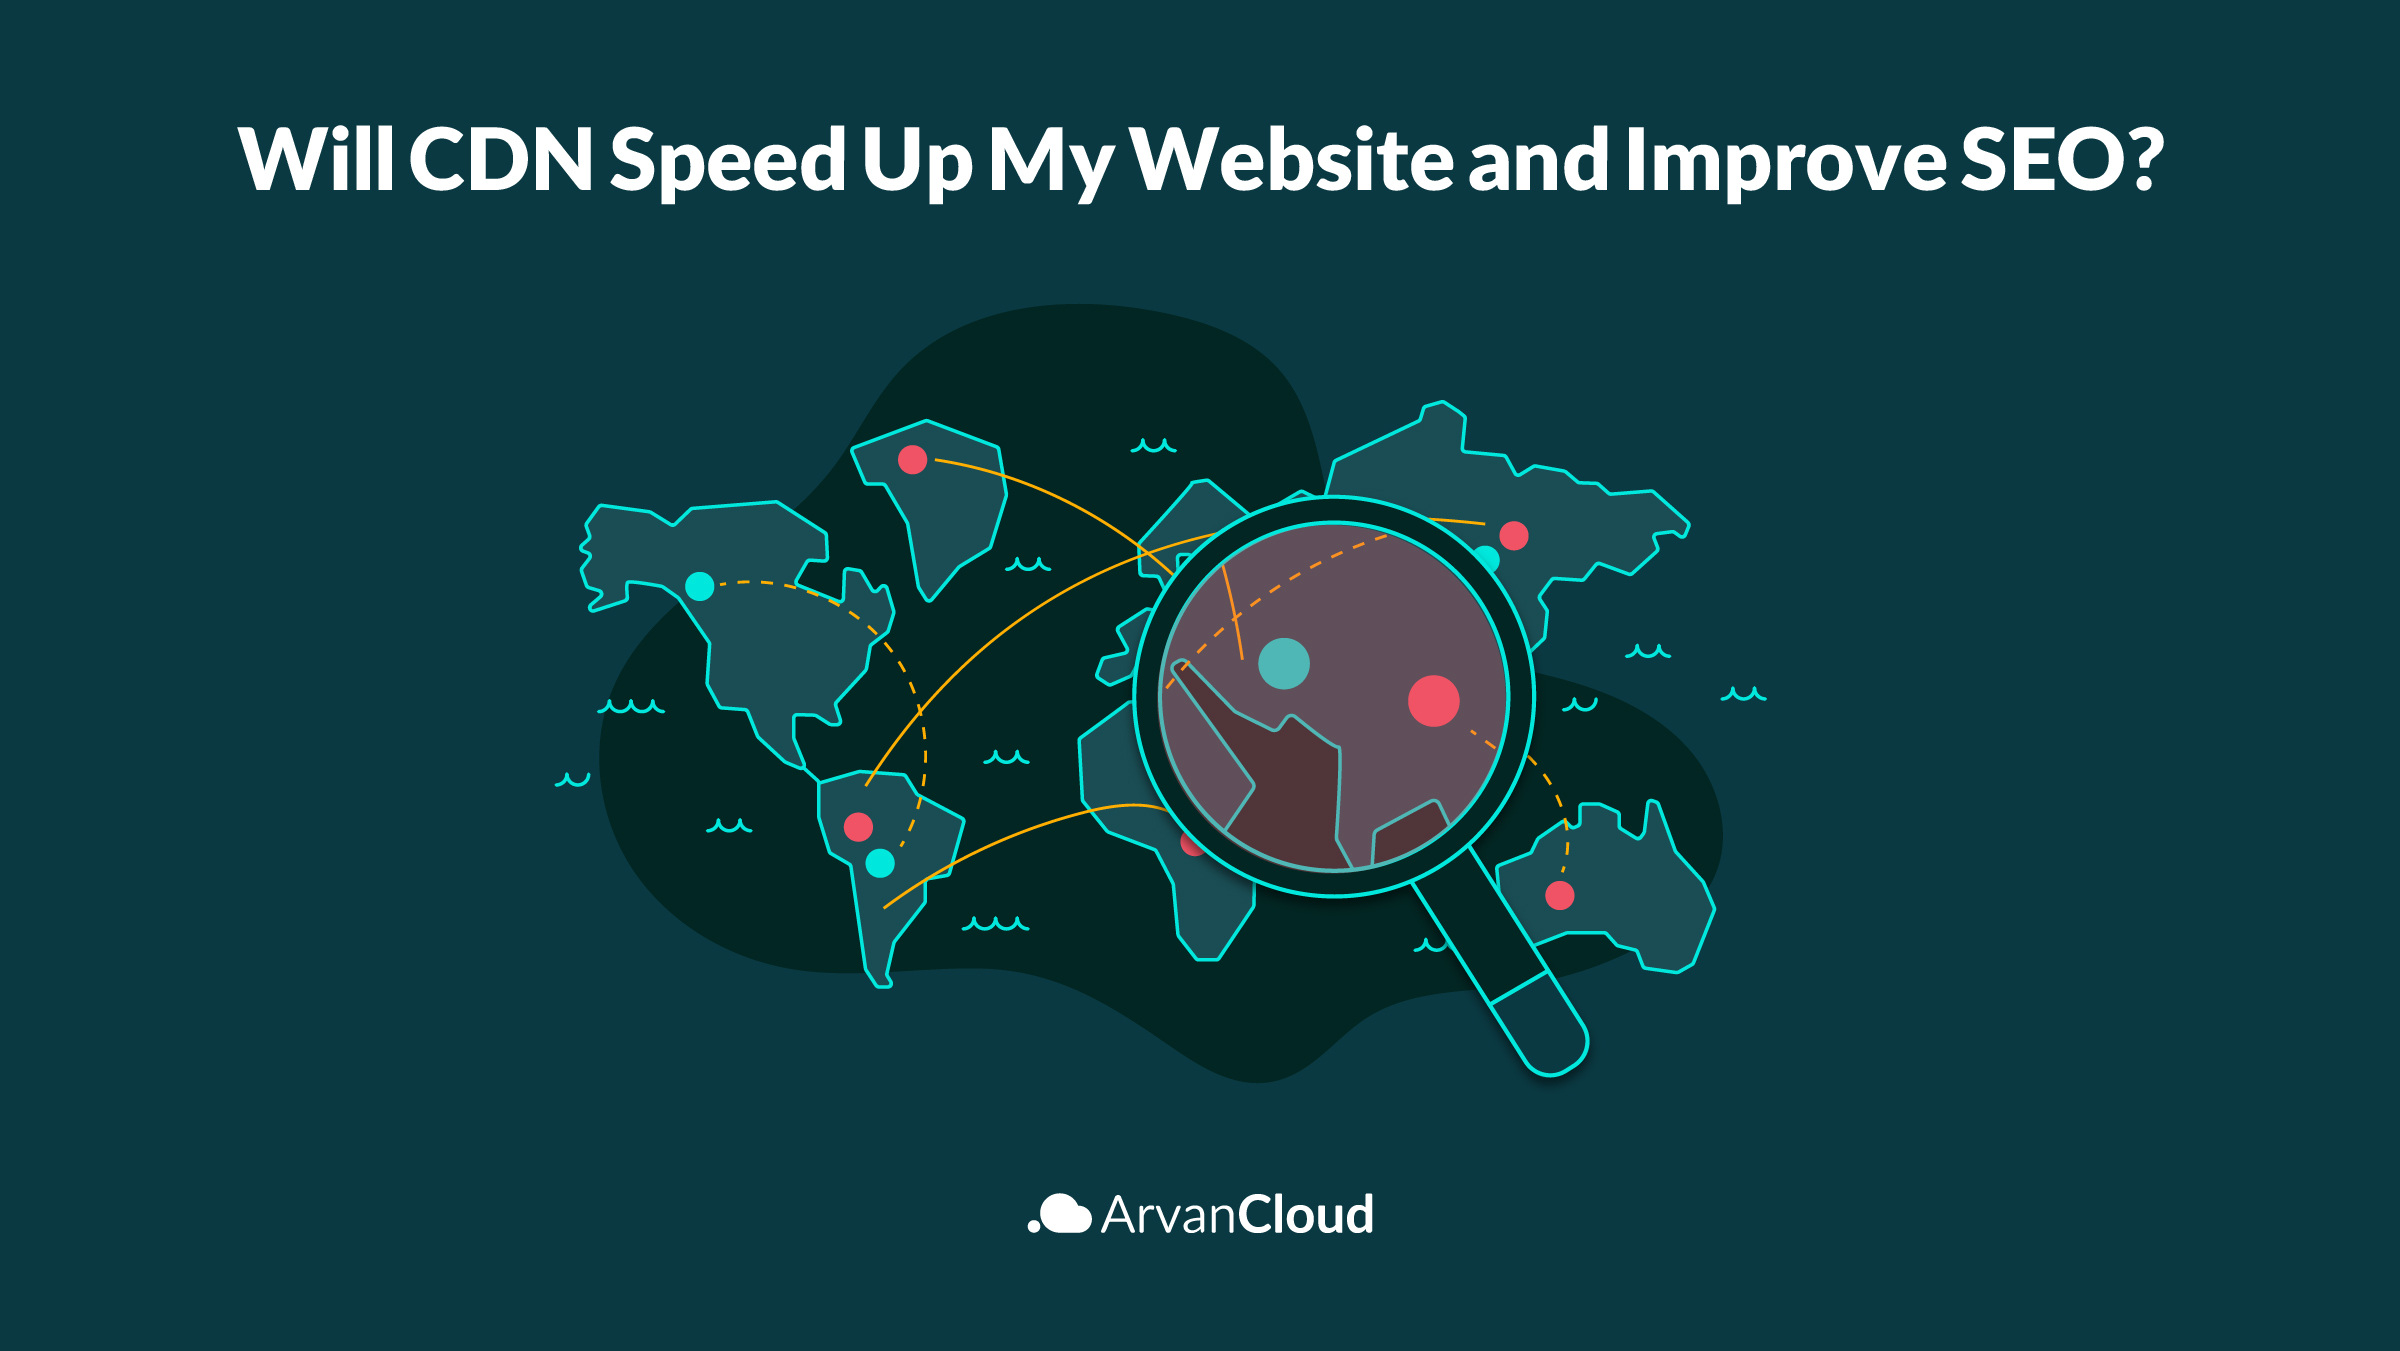 CDN Speed Up a Website and Improve SEO